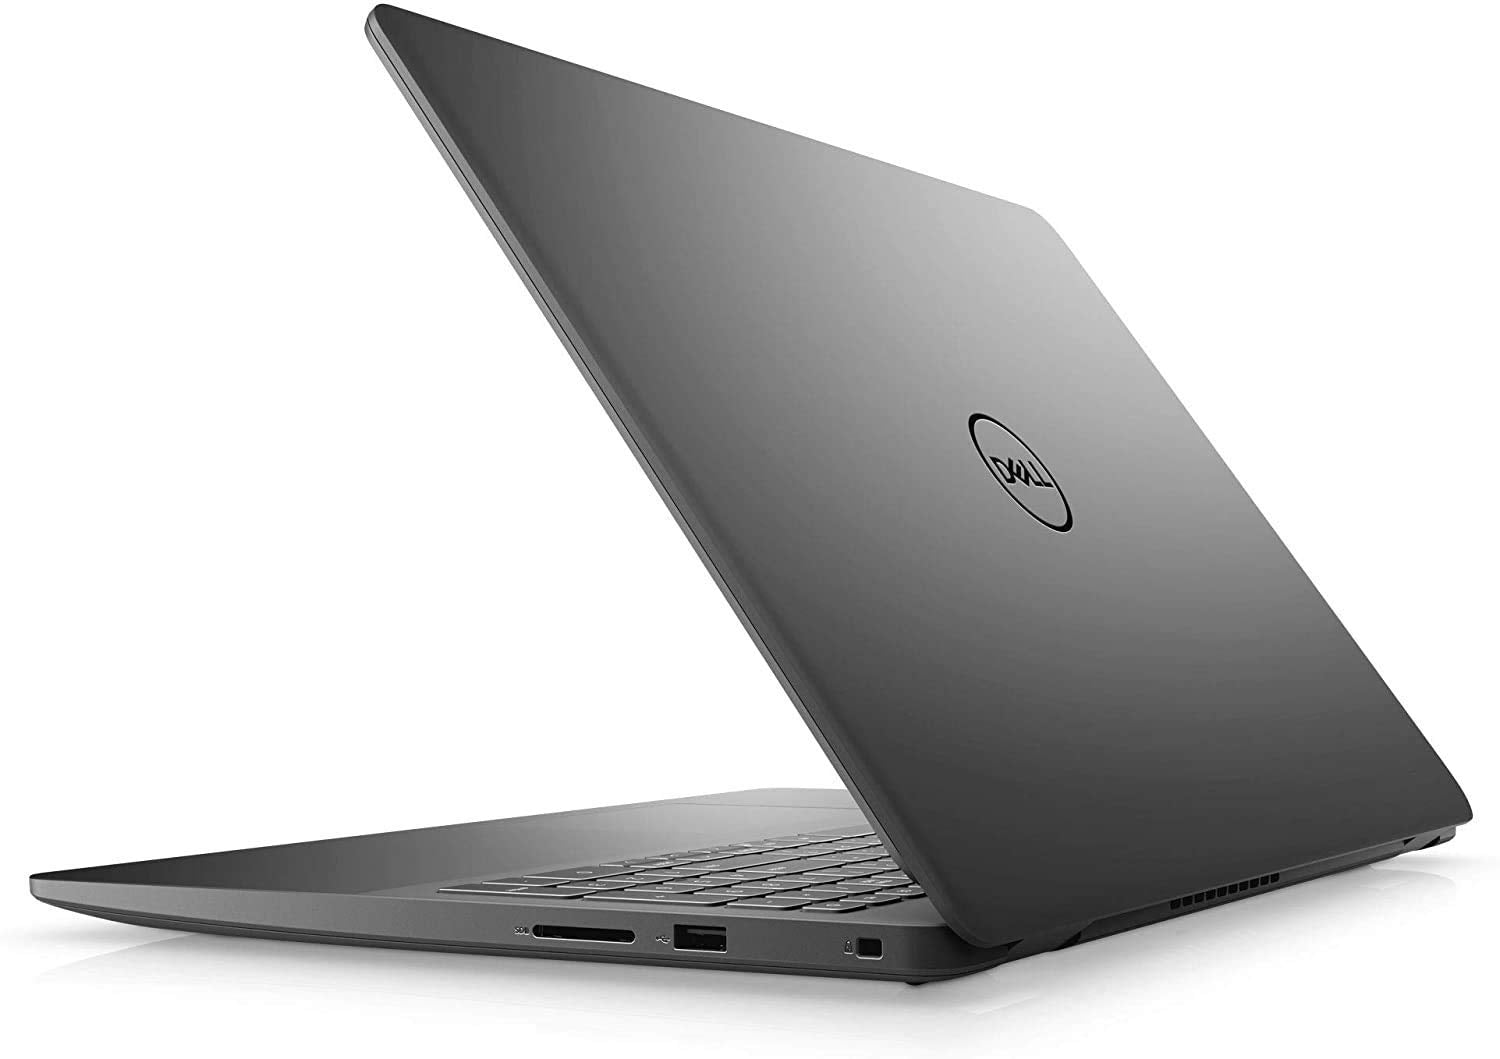 Dell Laptop Inspiron 3501, Core i5, 11th Gen, 8GB, Nvidia GeForce MX330 2GB GDDR5